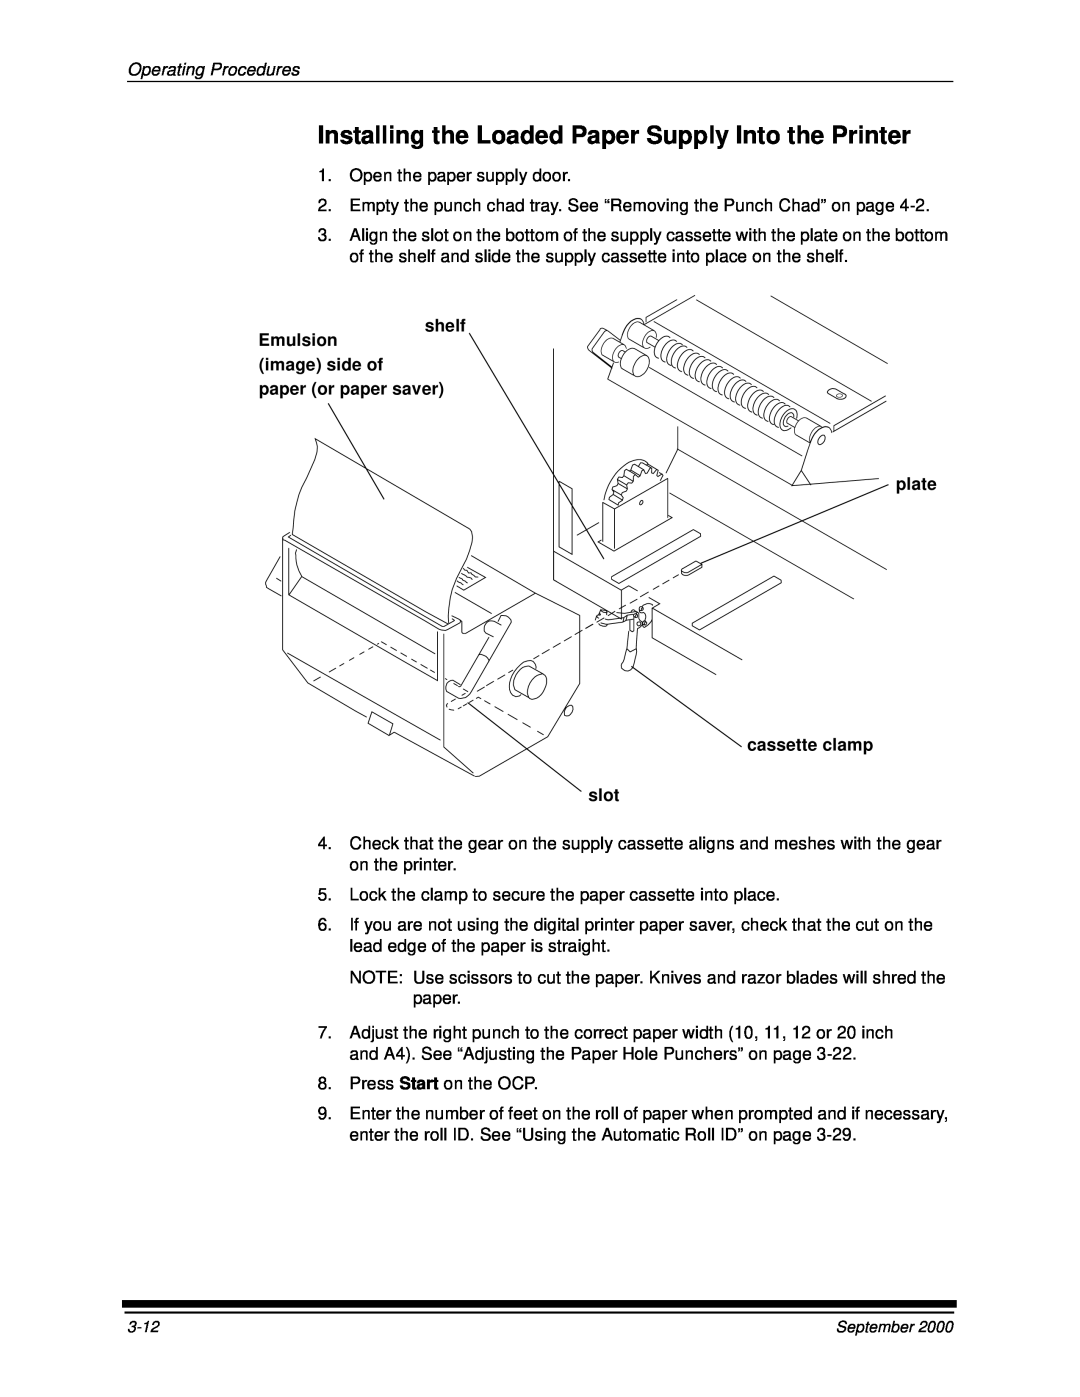 Kodak 20R manual Operating Procedures, shelf Emulsion image side of paper or paper saver, plate cassette clamp slot 